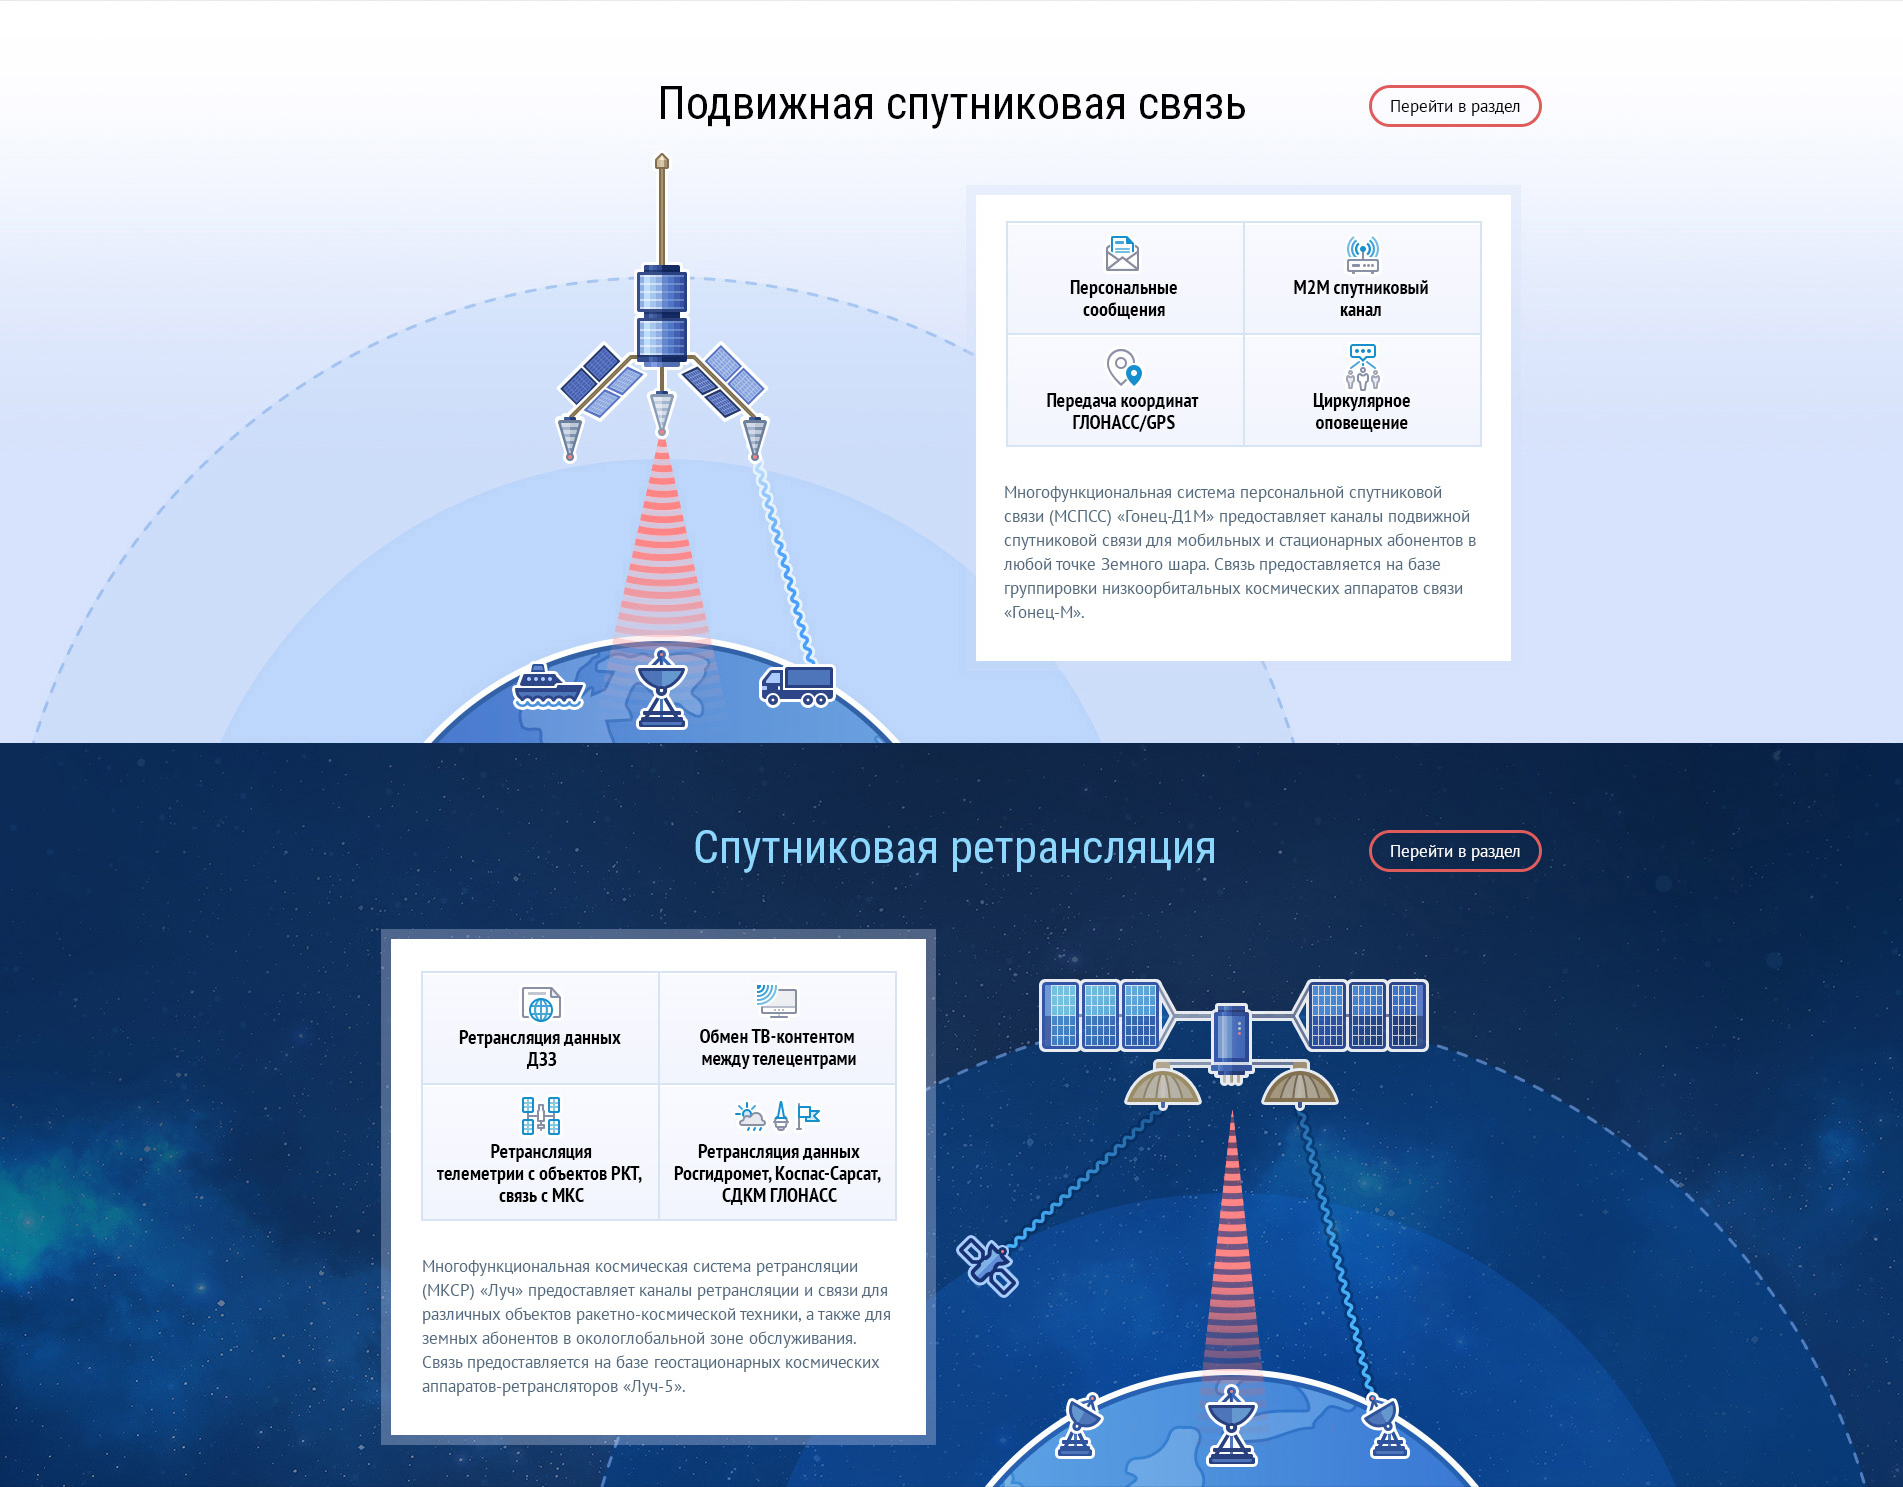 Анимация на главной странице gonets.ru